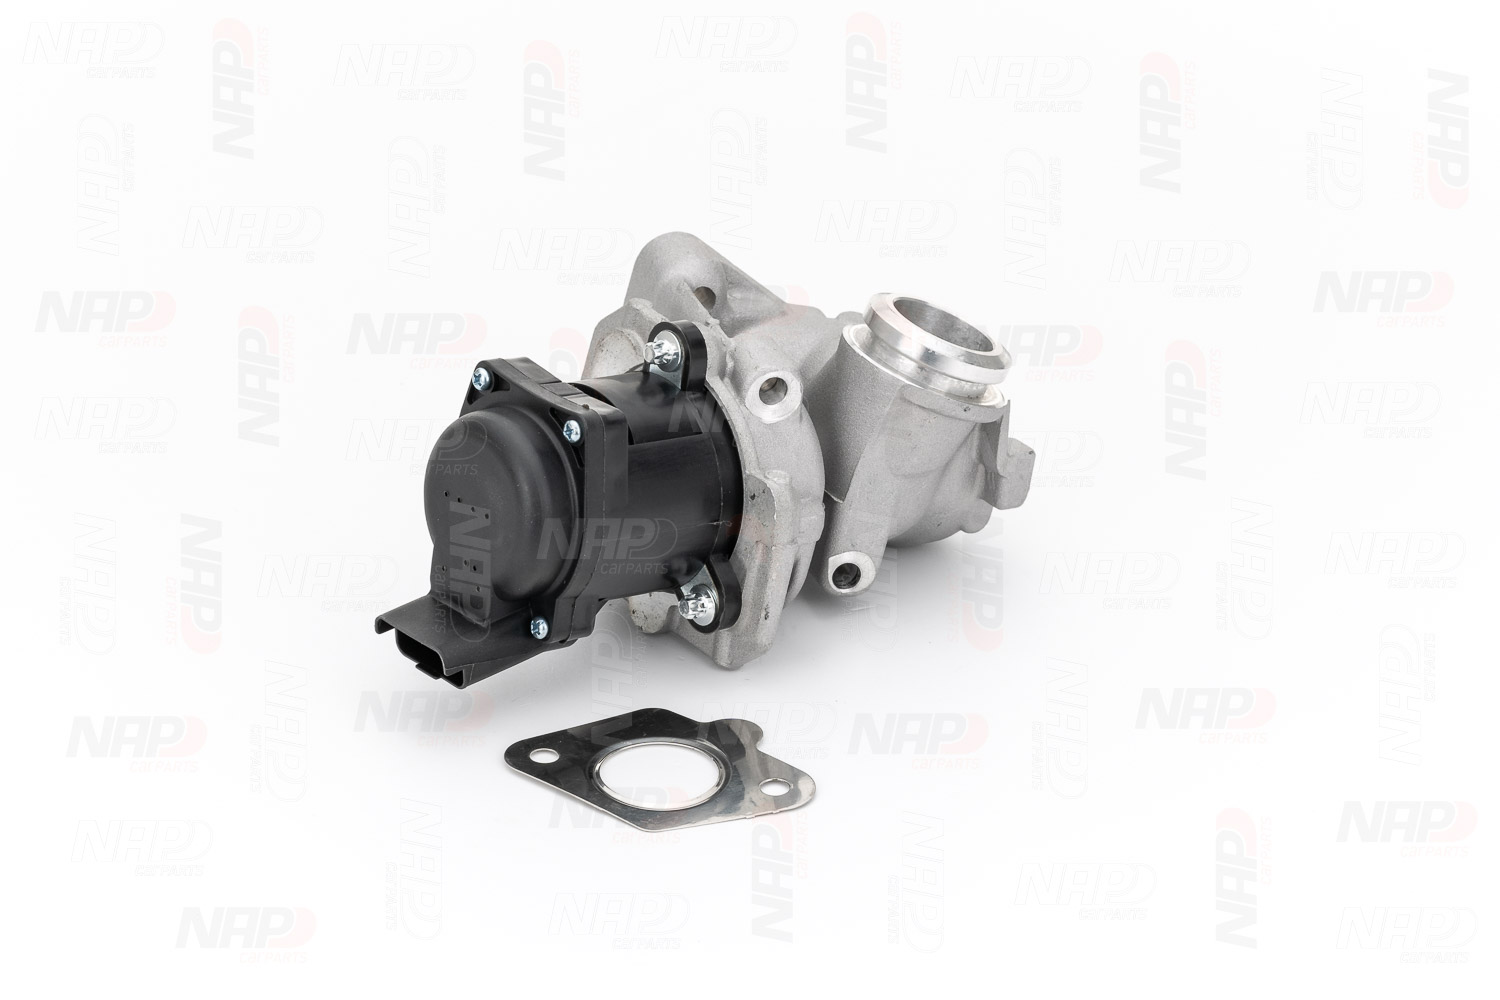 Original CAV10052 NAP carparts EGR valve experience and price